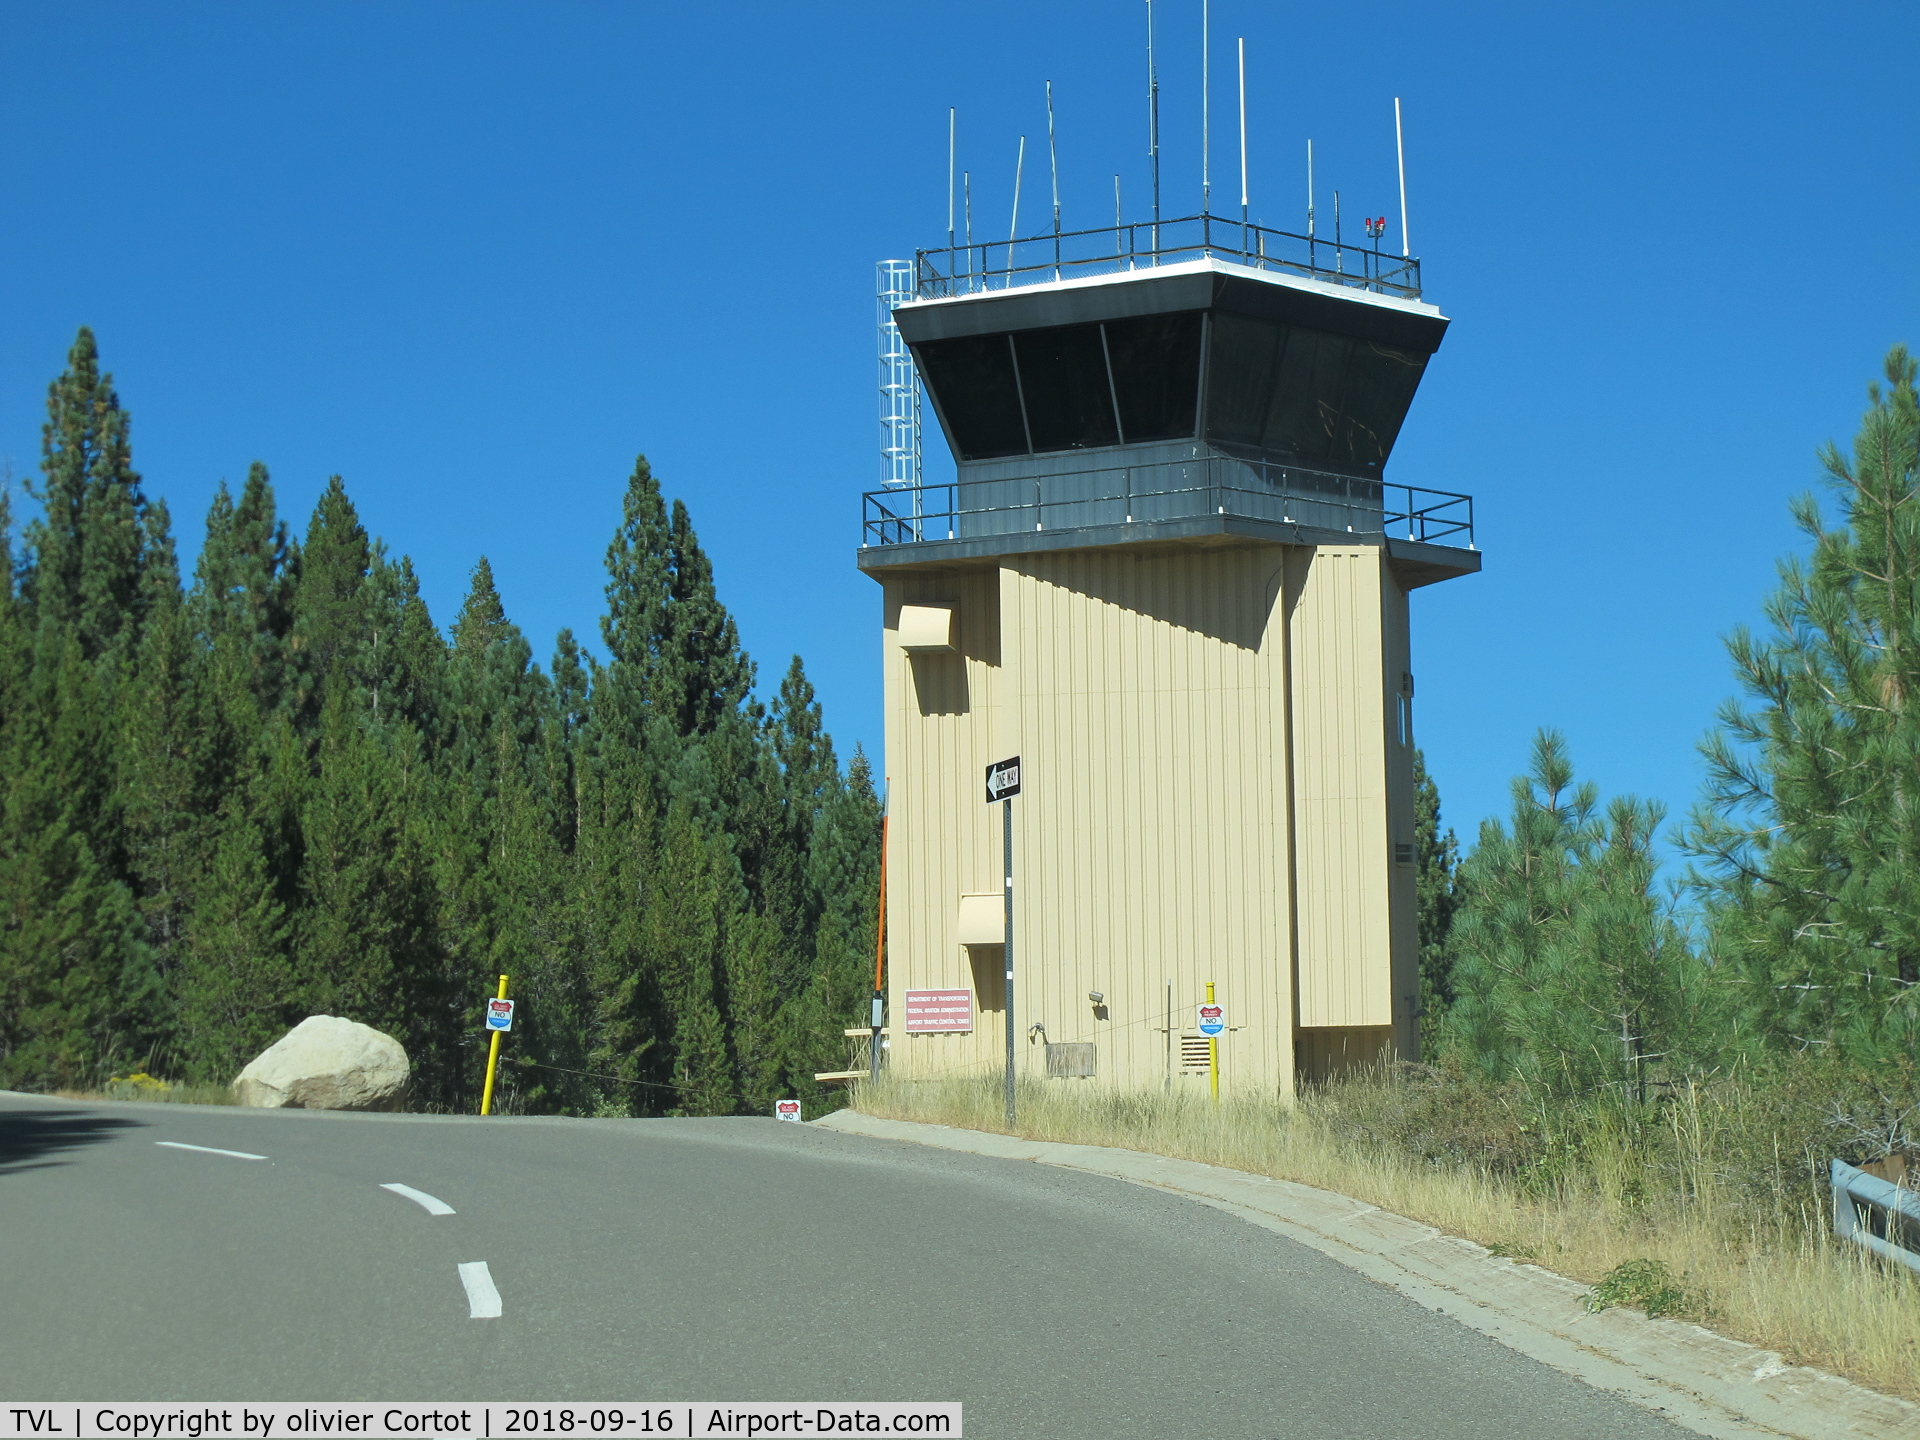 Lake Tahoe Airport (TVL) - the control tower